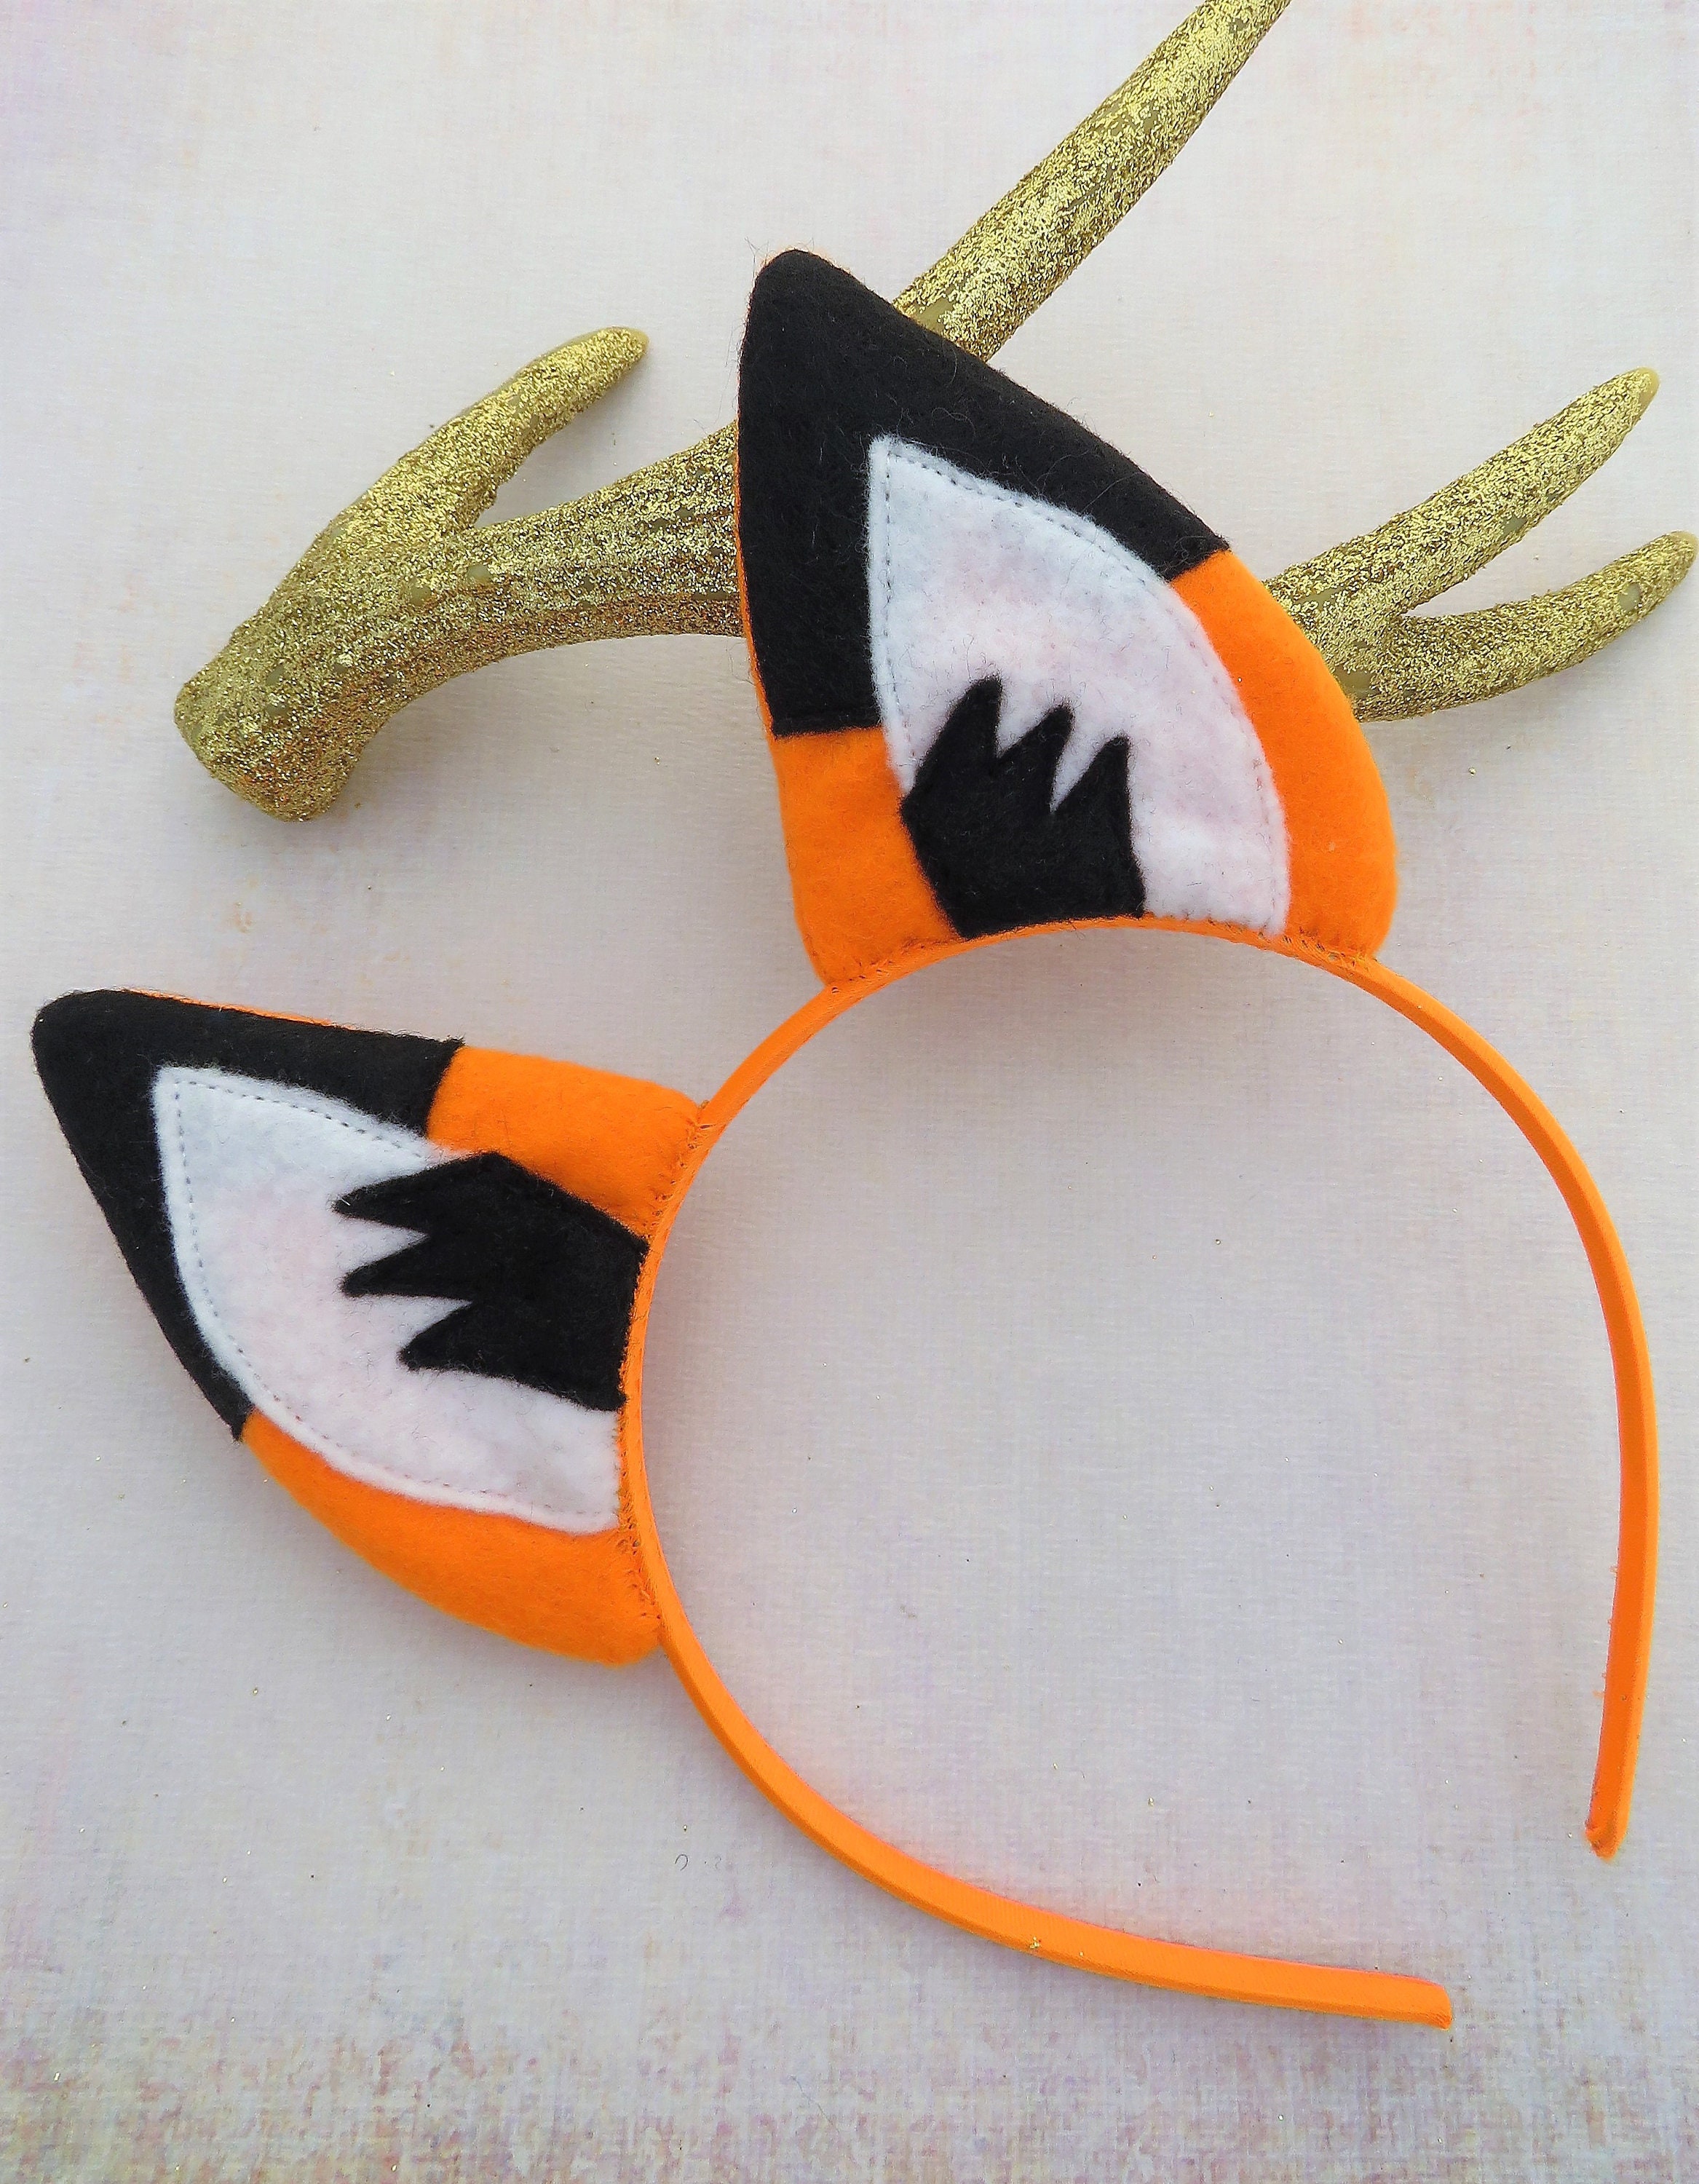 Fox Ears Fox Headband Animal Ears Fox Costume Accessory - Etsy